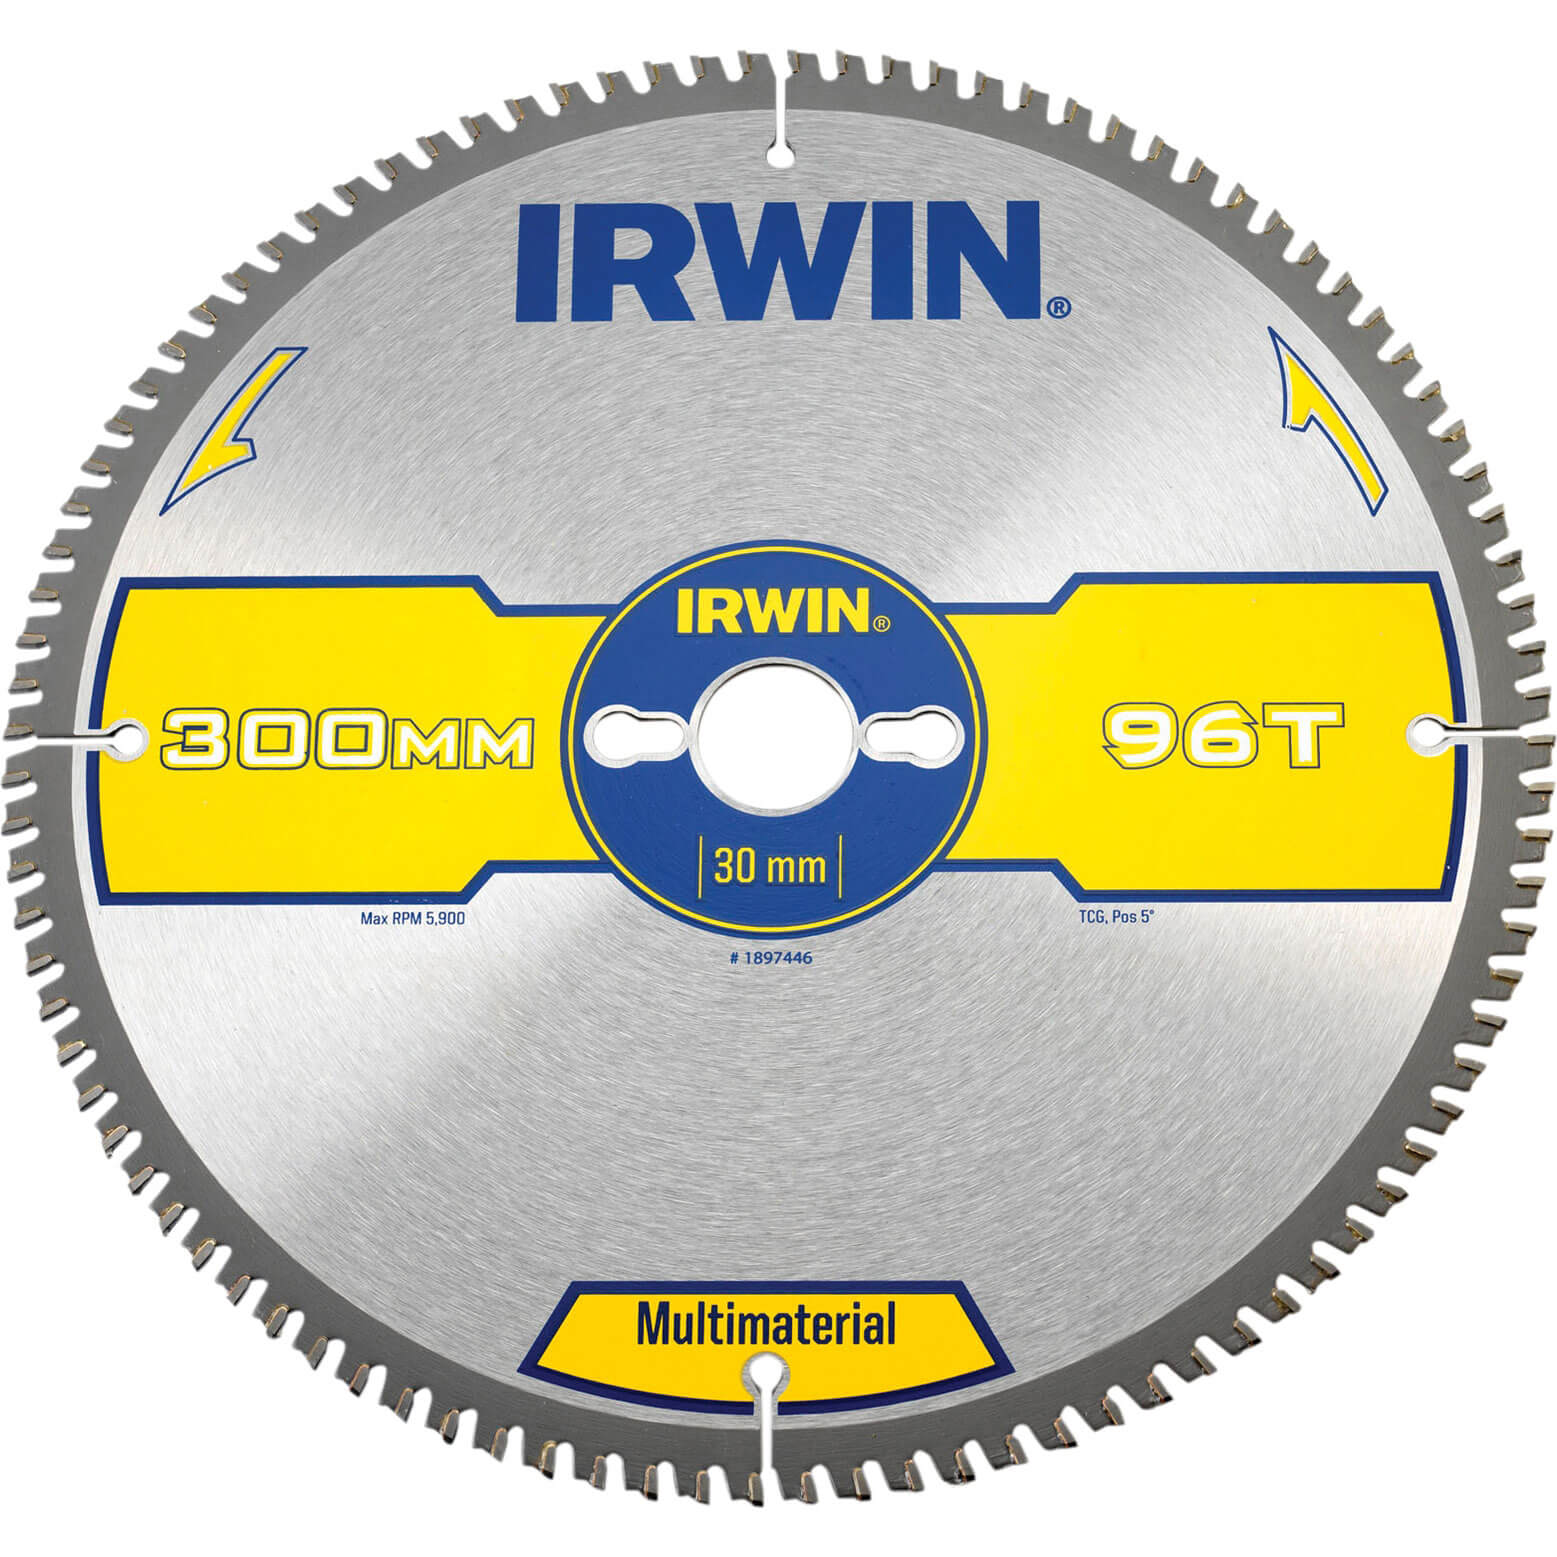 Photo of Irwin Multi Material Circular Saw Blade 300mm 96t 30mm